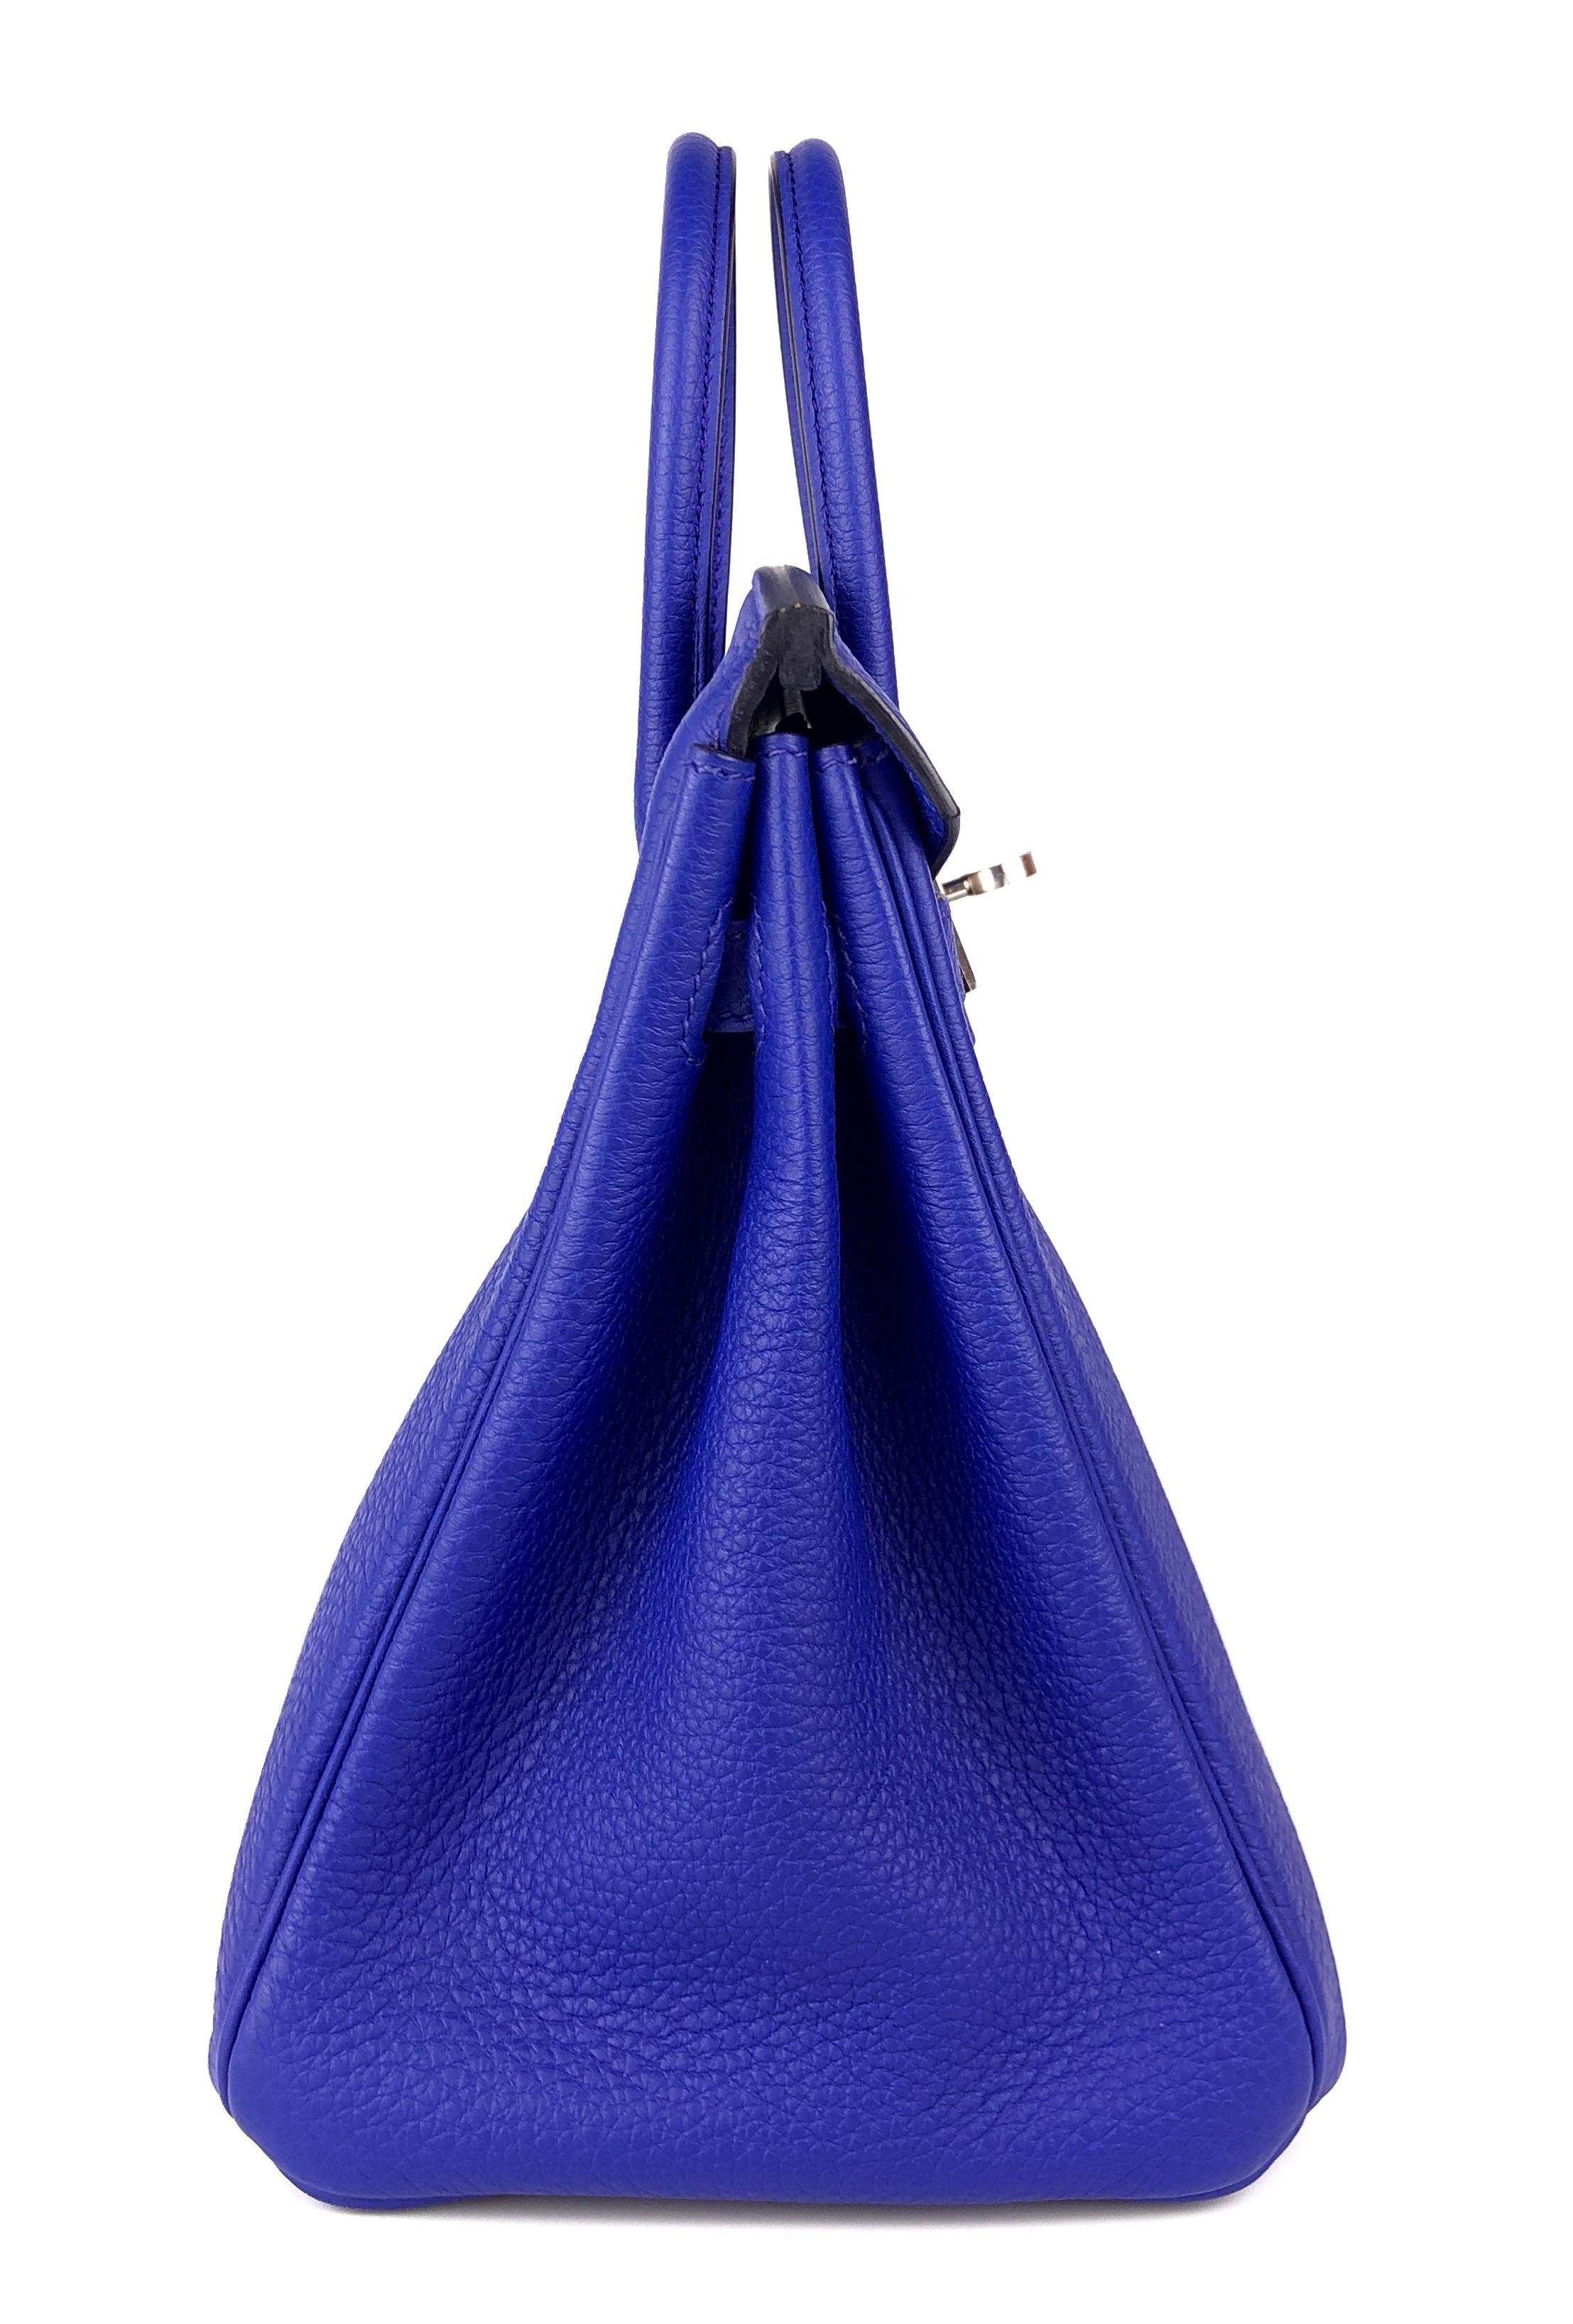 Hermes Birkin 25 Blue Bleu Royal Togo Leather Handbag Palladium Hardware NEW  5